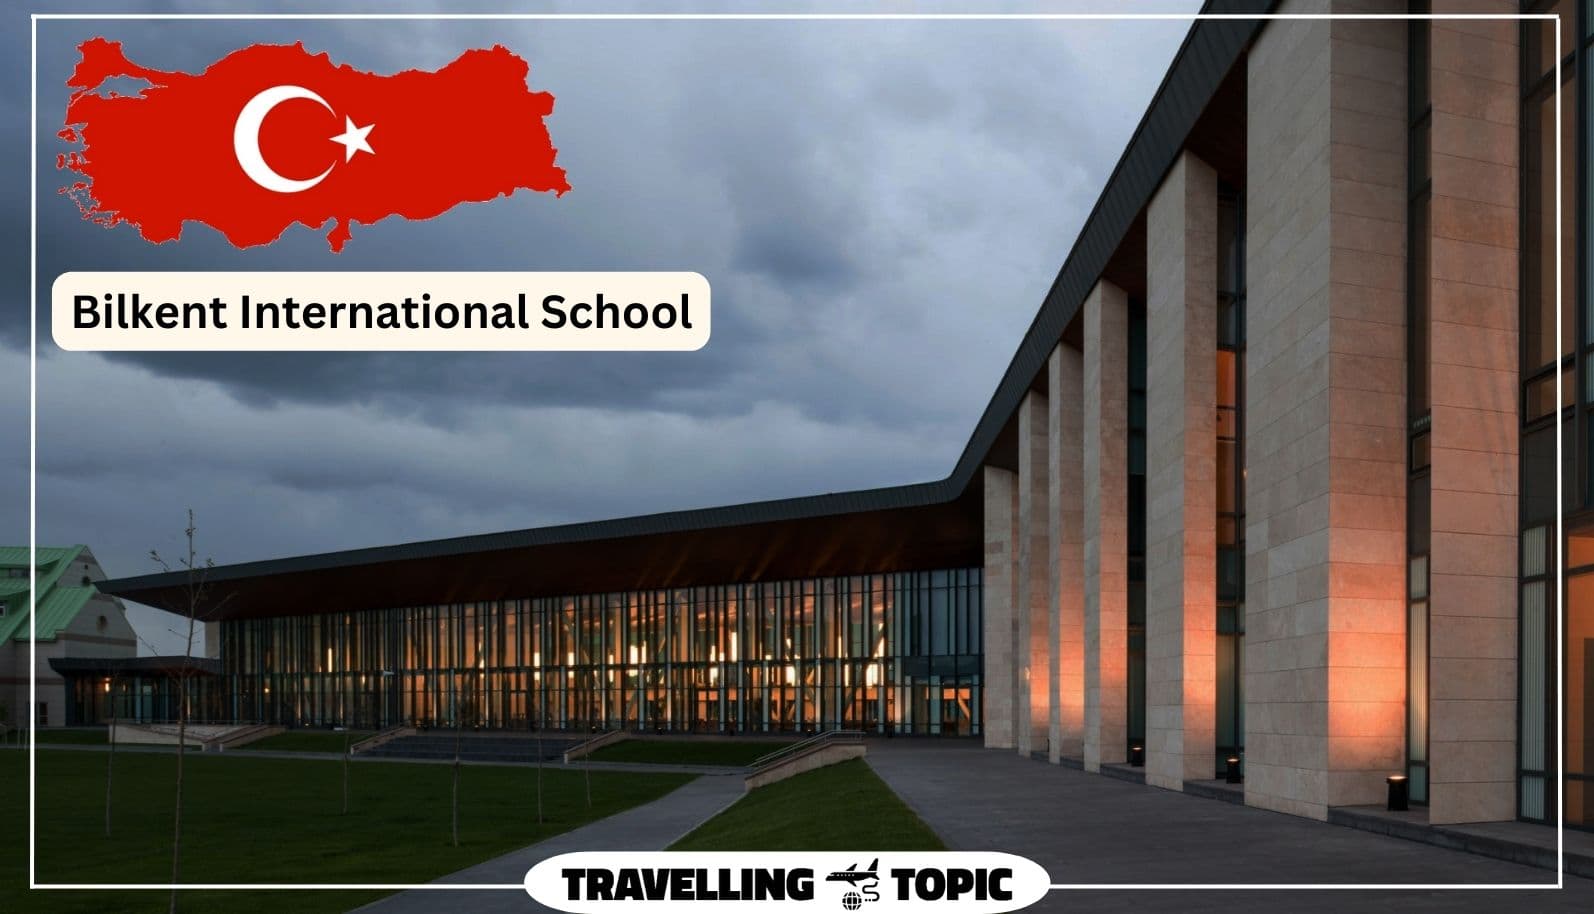 Bilkent International School